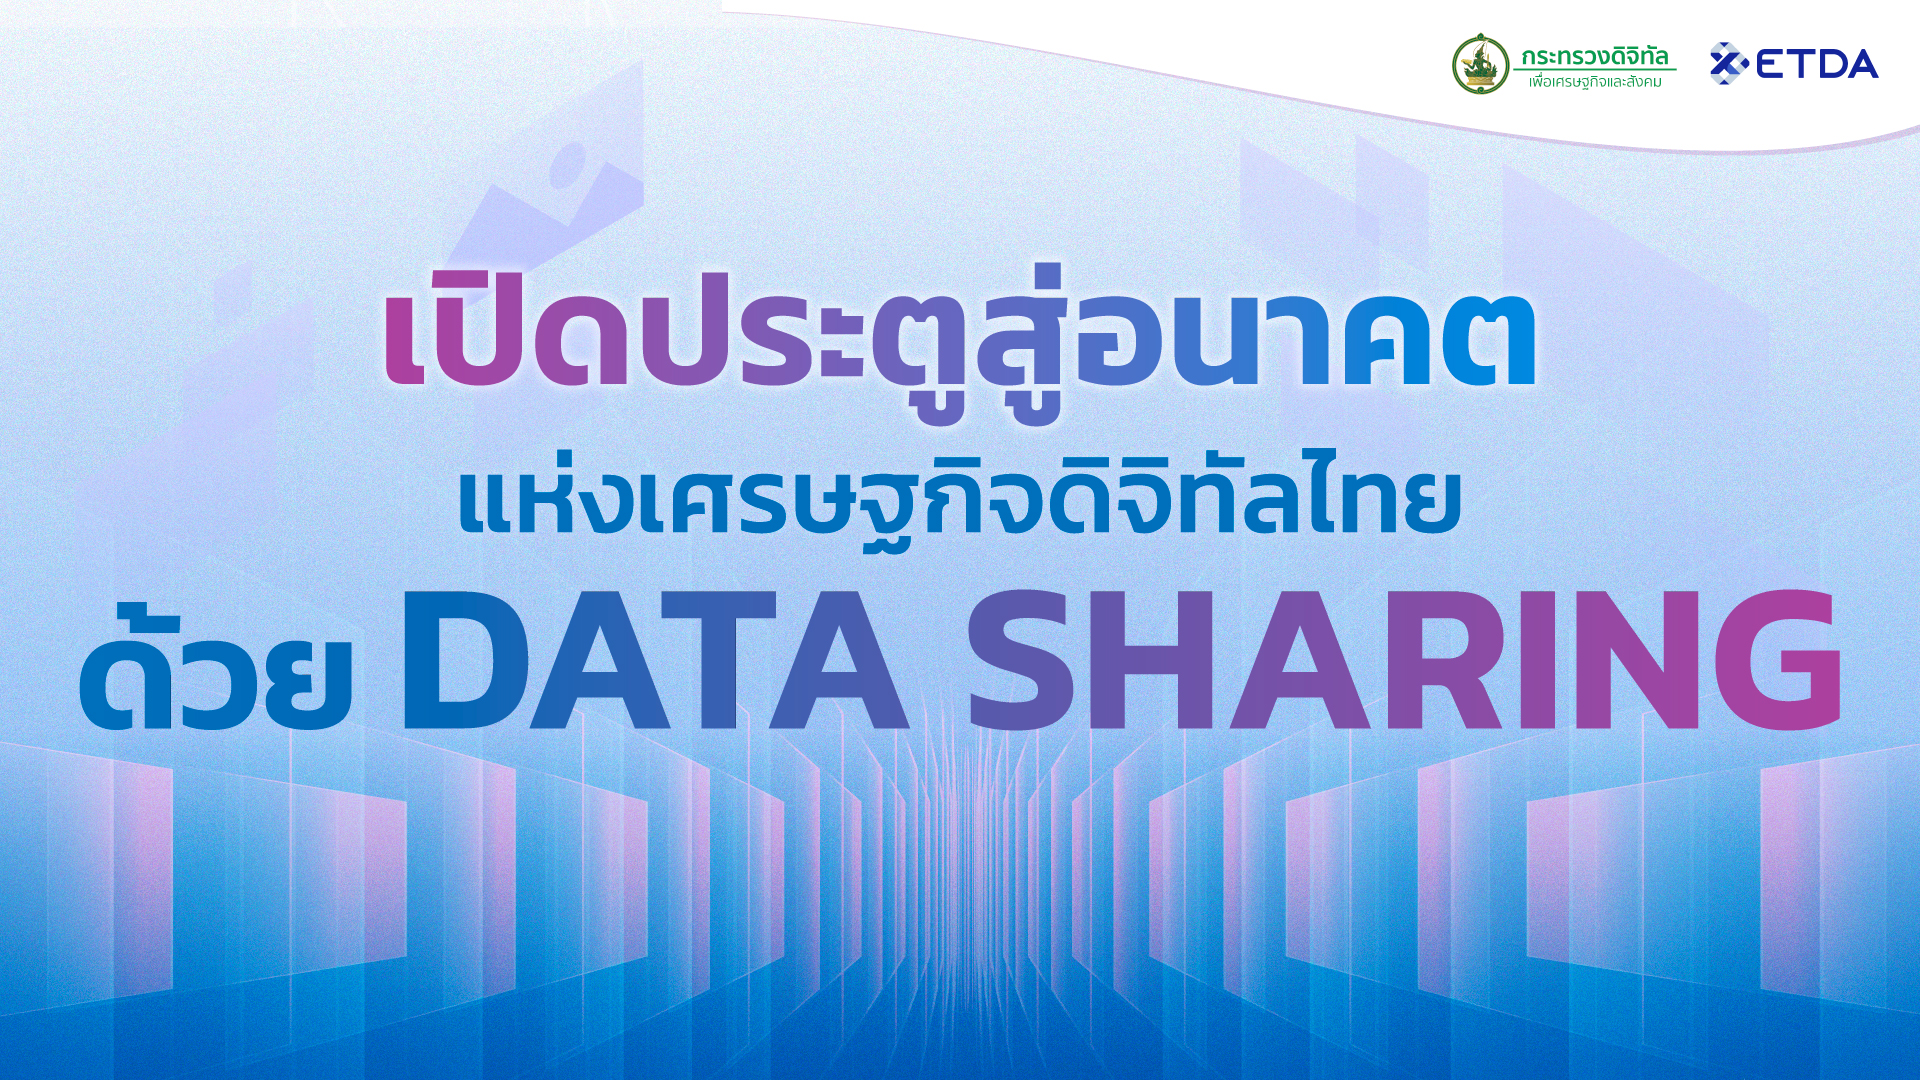 Data Sharing คืออะไร ? และใครบ้างที่เกี่ยวข้องกับการทำ Data Sharing